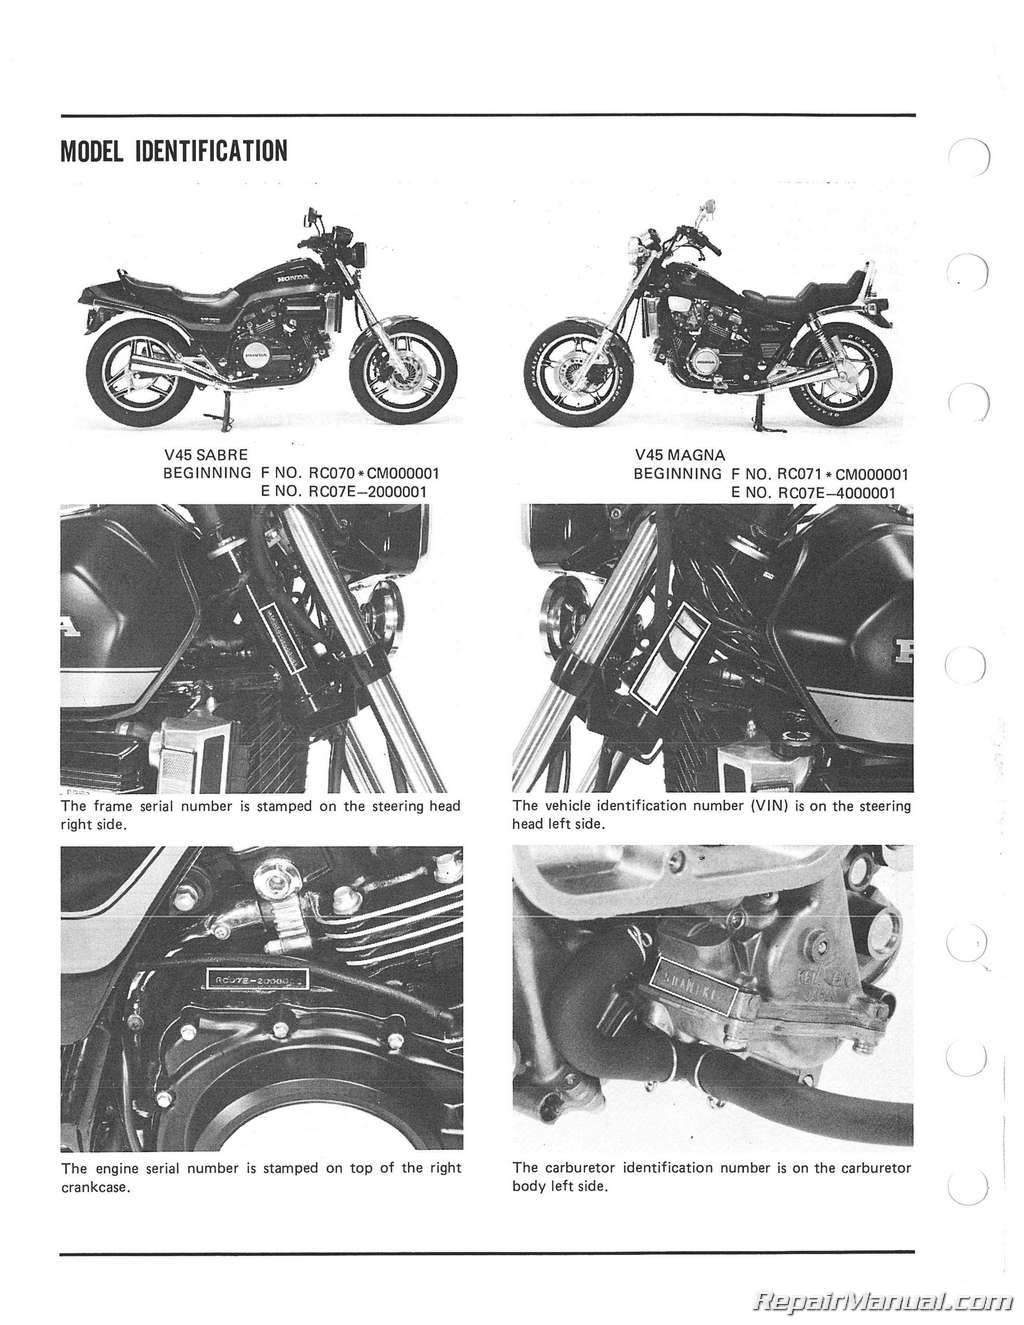 1984 honda v45 magna manual